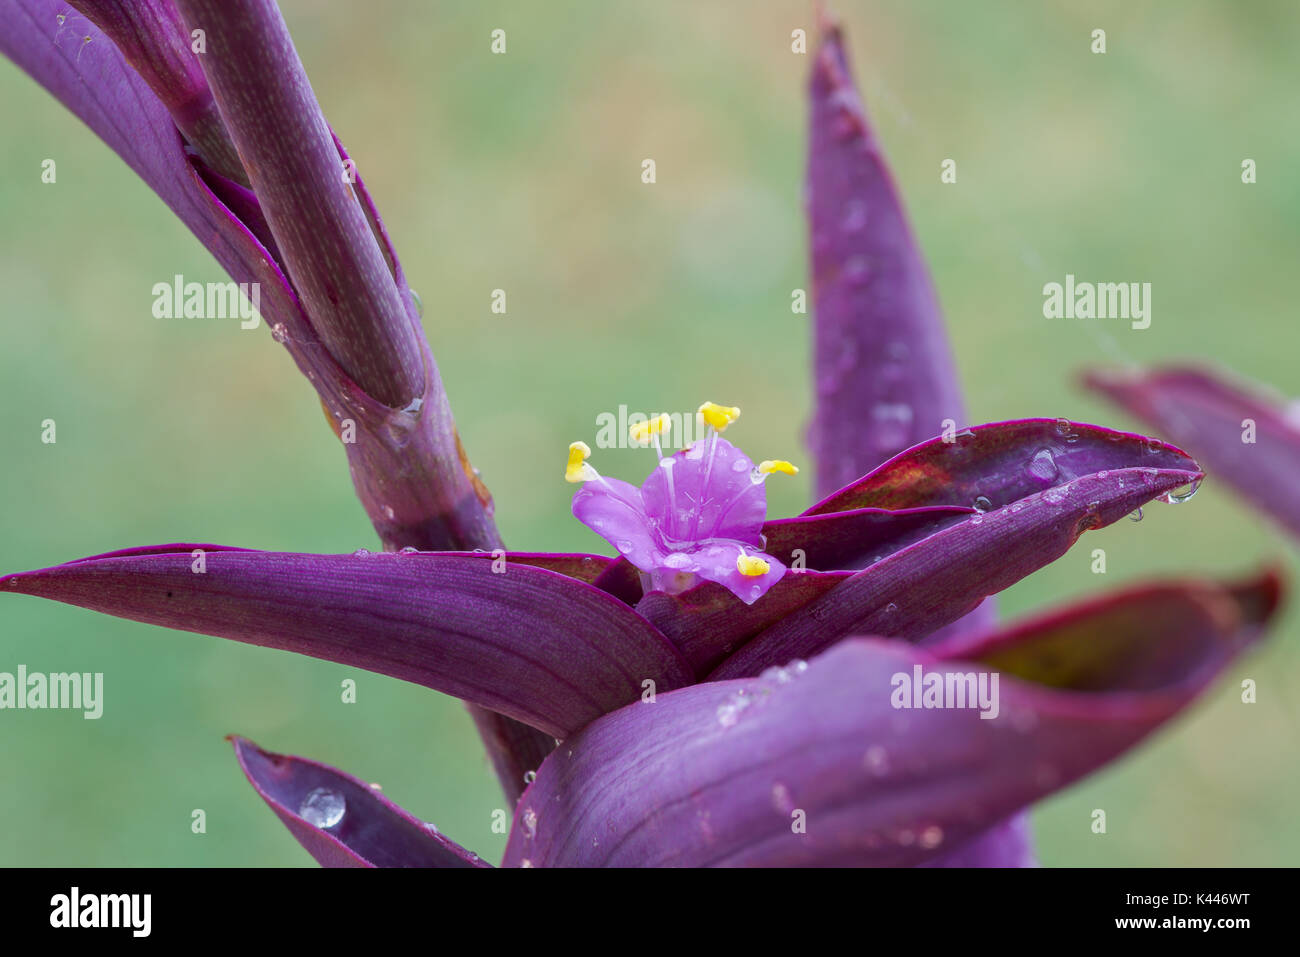 Purple Heart Or Setcresea (tradescantia pallida purpurea) closeup of the flower Stock Photo